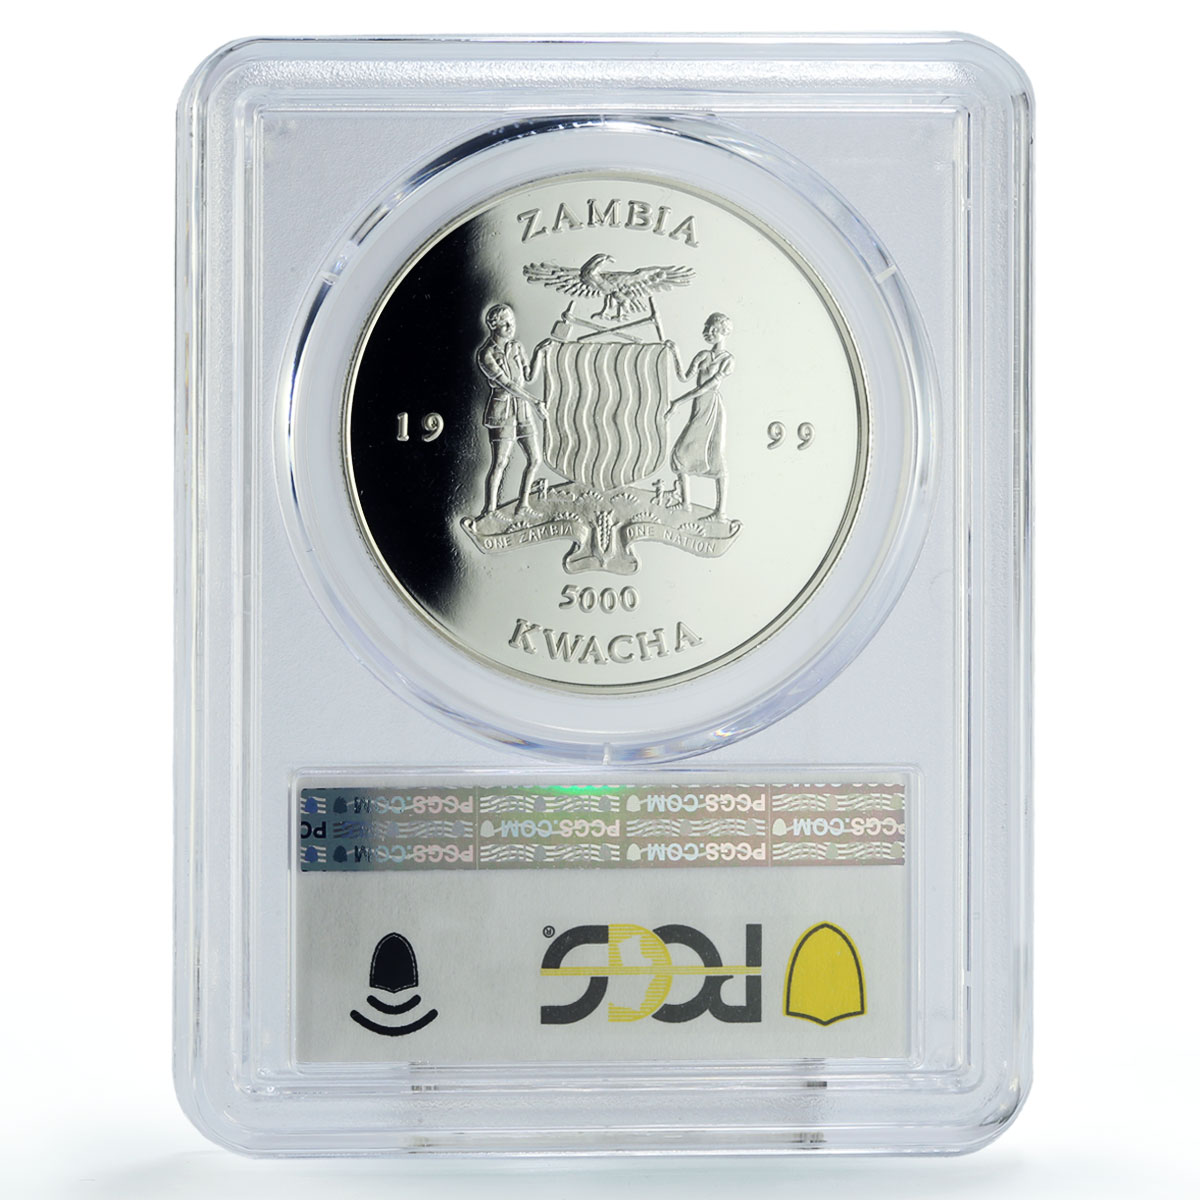 Zambia 5000 kwacha Conservation Lion Pride Fauna PR68 PCGS silver coin 1999